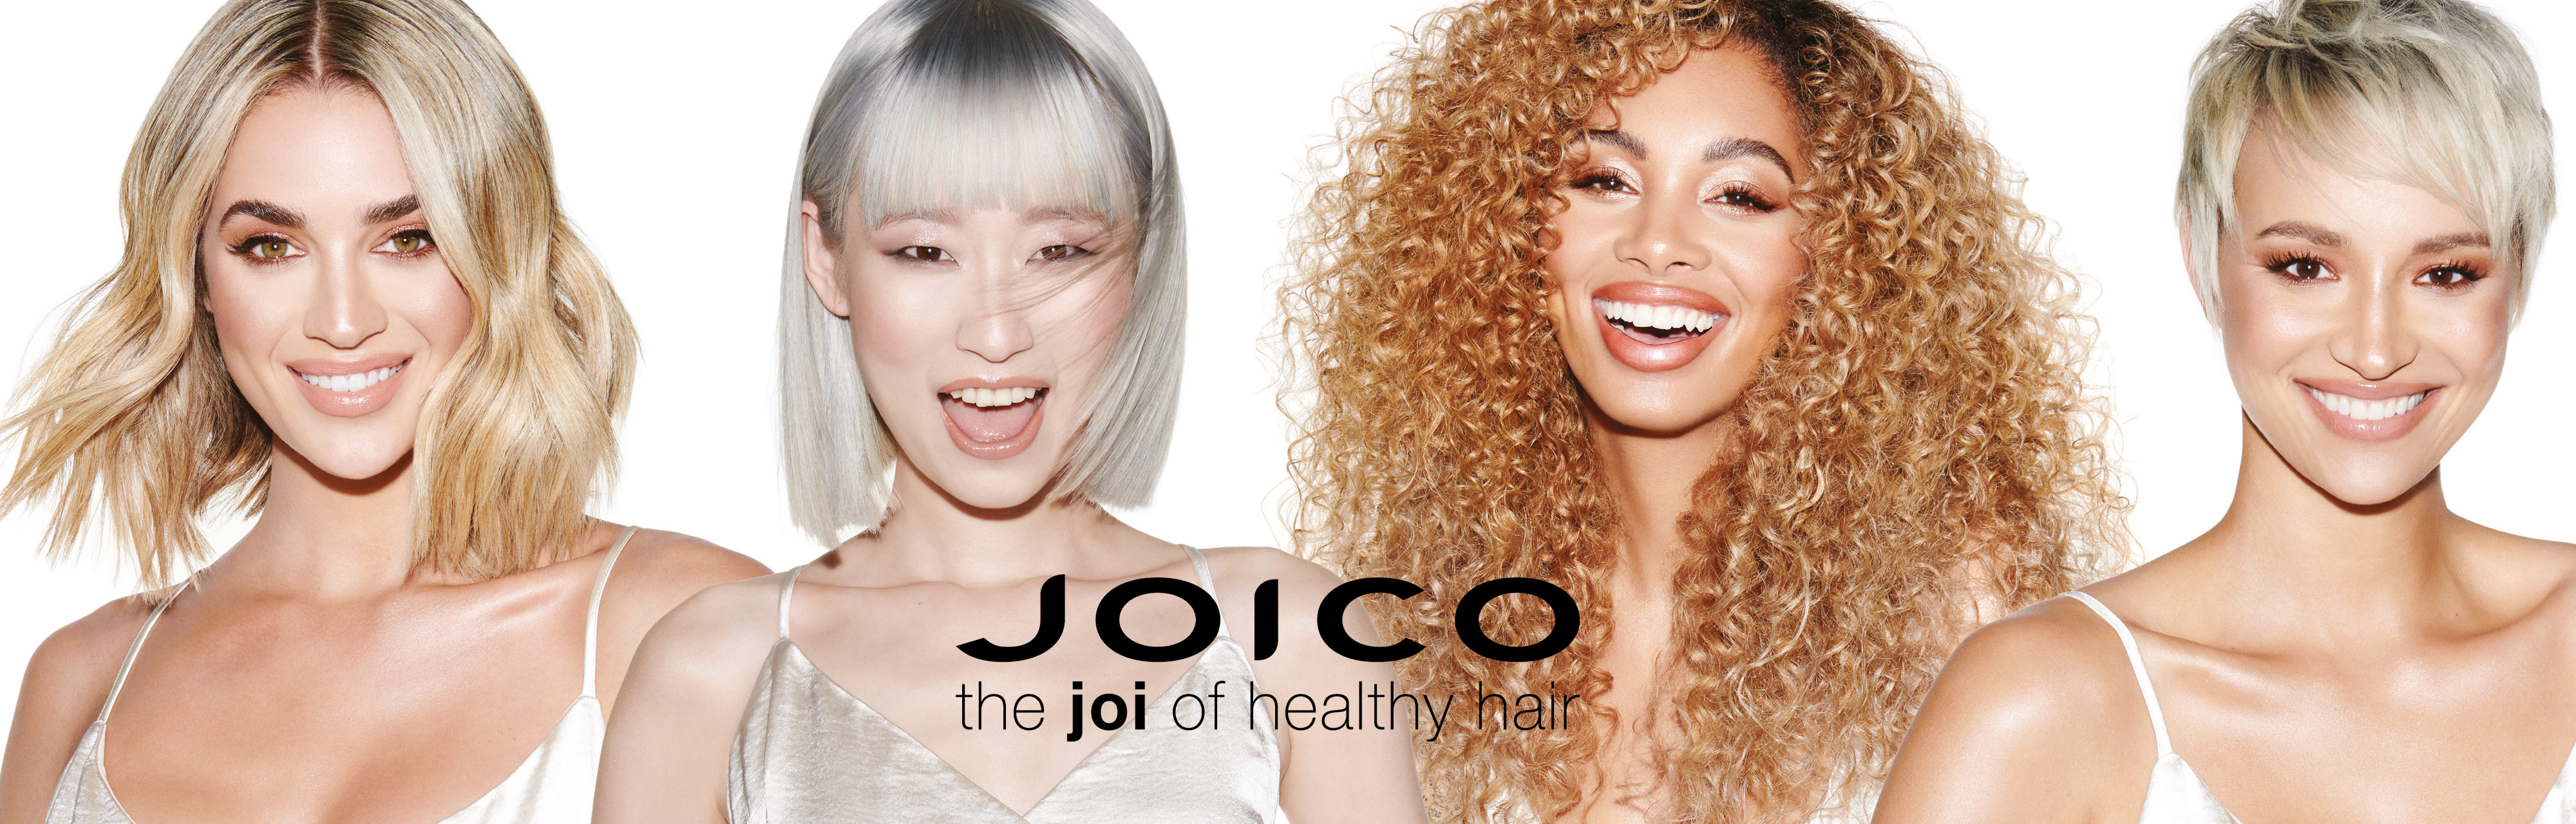 Image of Joico hair models